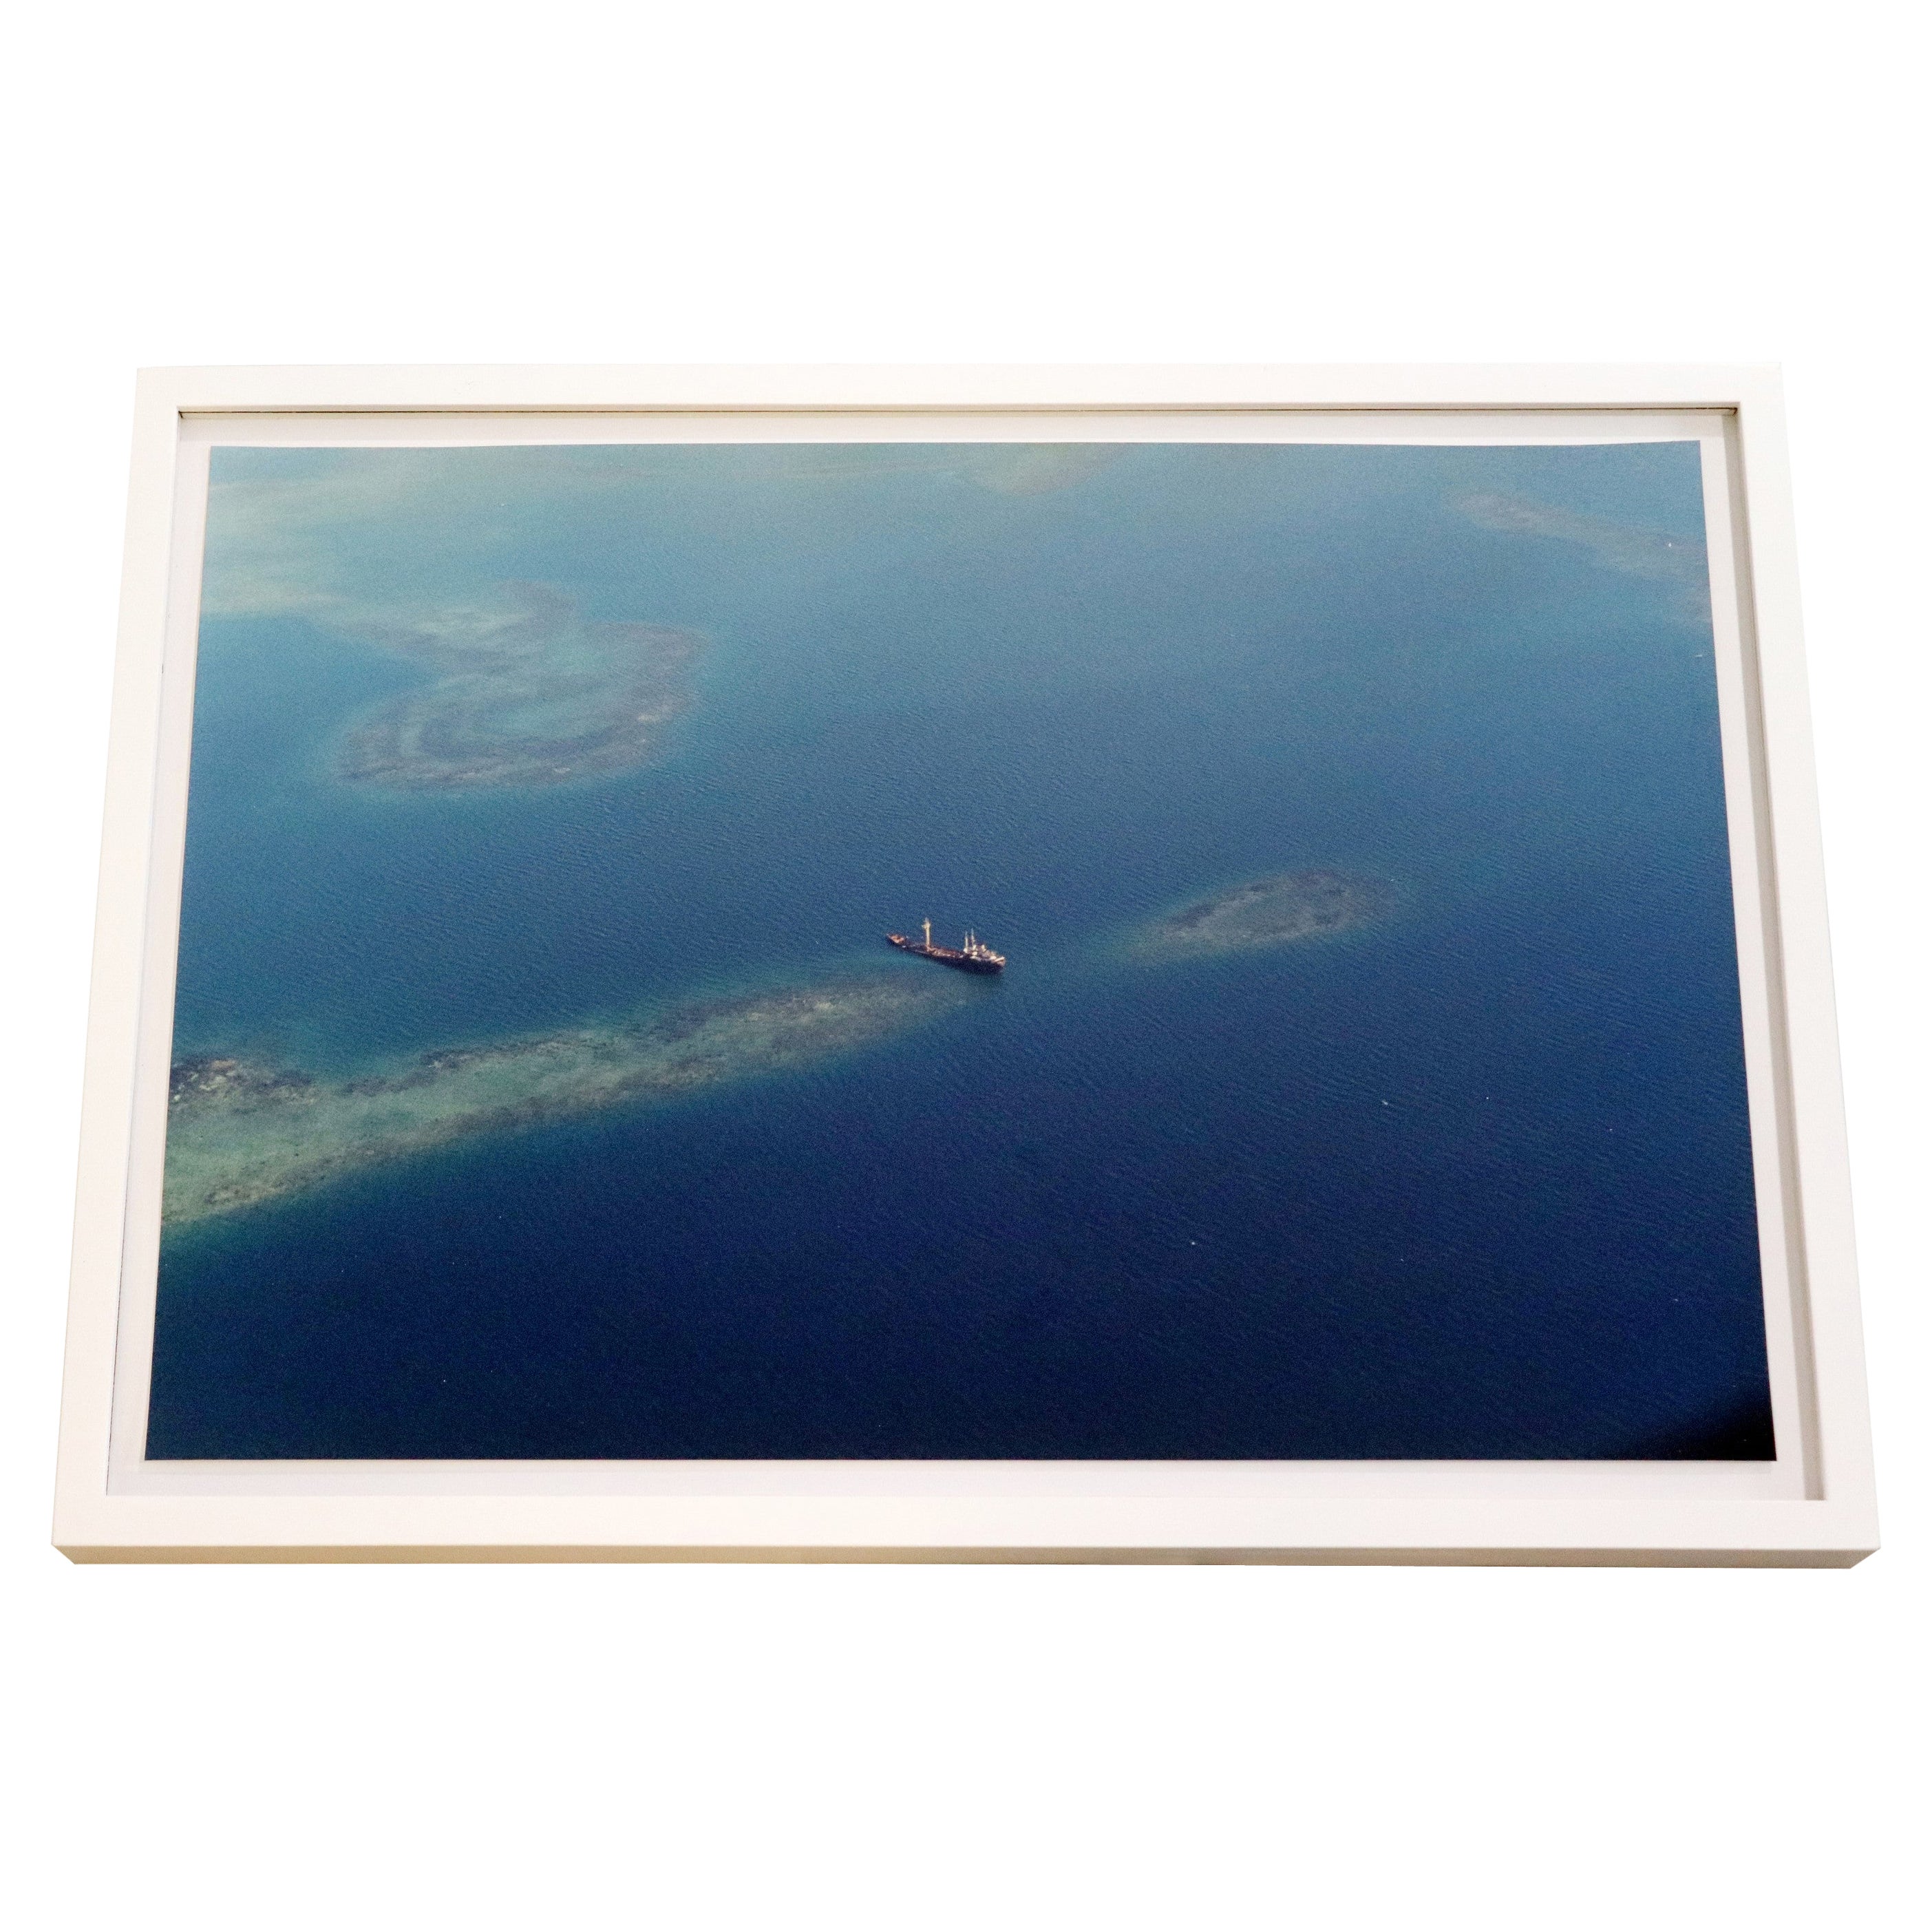 Chantal James Haiti Boat at Sea Photograph Signed Framed For Sale